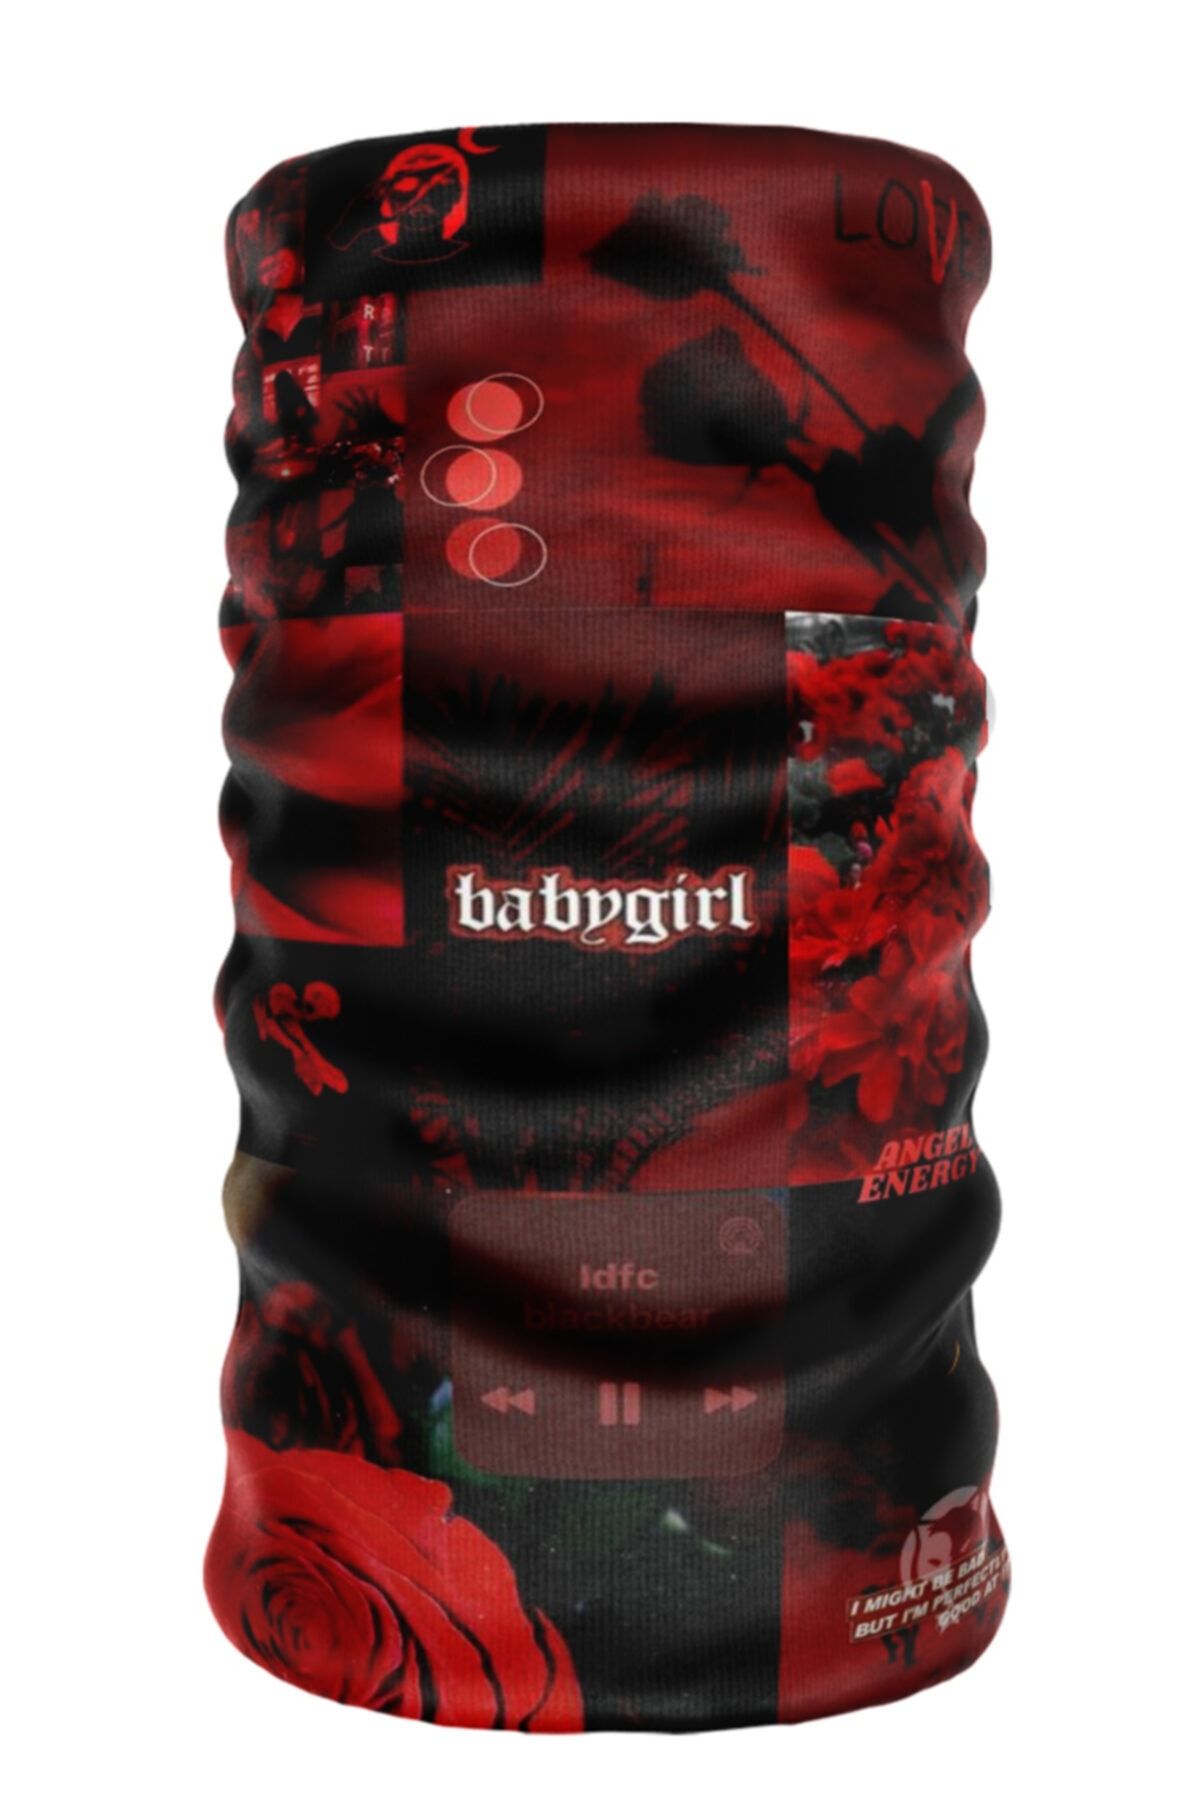 e-Taktik Cover Desing Barby Girl Red Flower Extreme Seamless Sporcu Boyunluk Bandana Buff Baf Saç Bandı